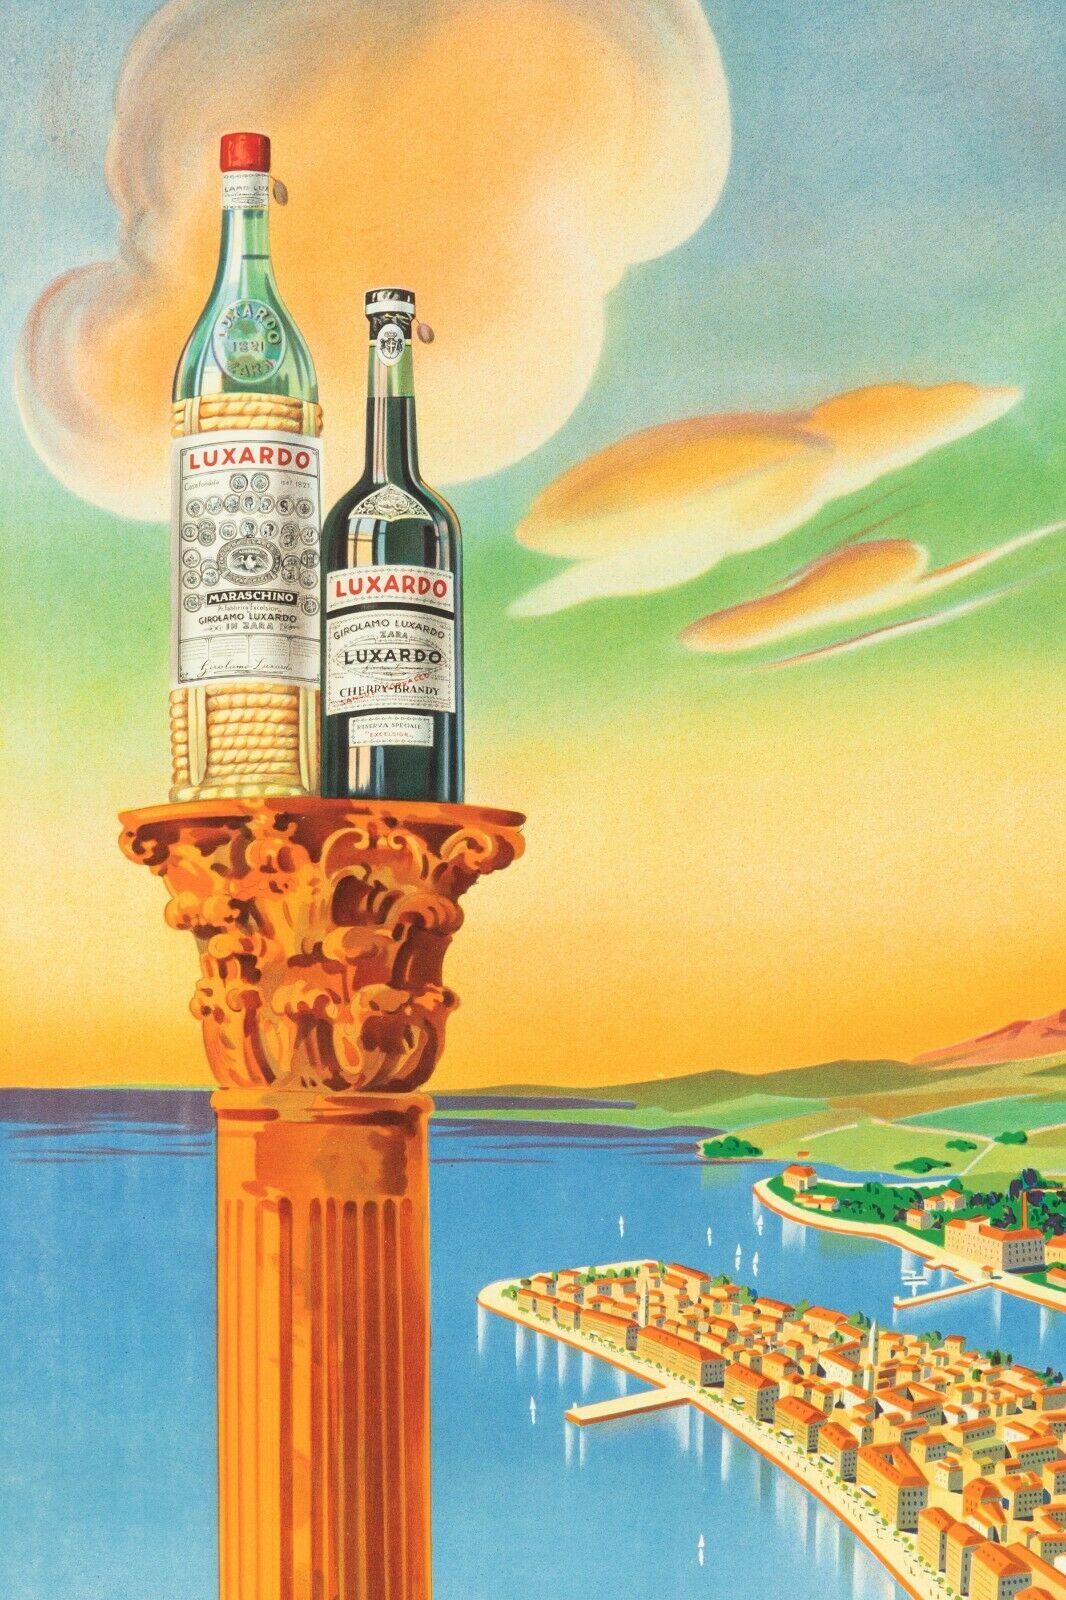 Original Vintage Poster-Raverta-Luxardo-Maraschino-Zara-Croatia-1939

Advertising poster for the Italian liqueur Maraschino Luxardo. This poster shows the Croatian port city of ZARA

Additional details:
Materials and Techniques: Colour